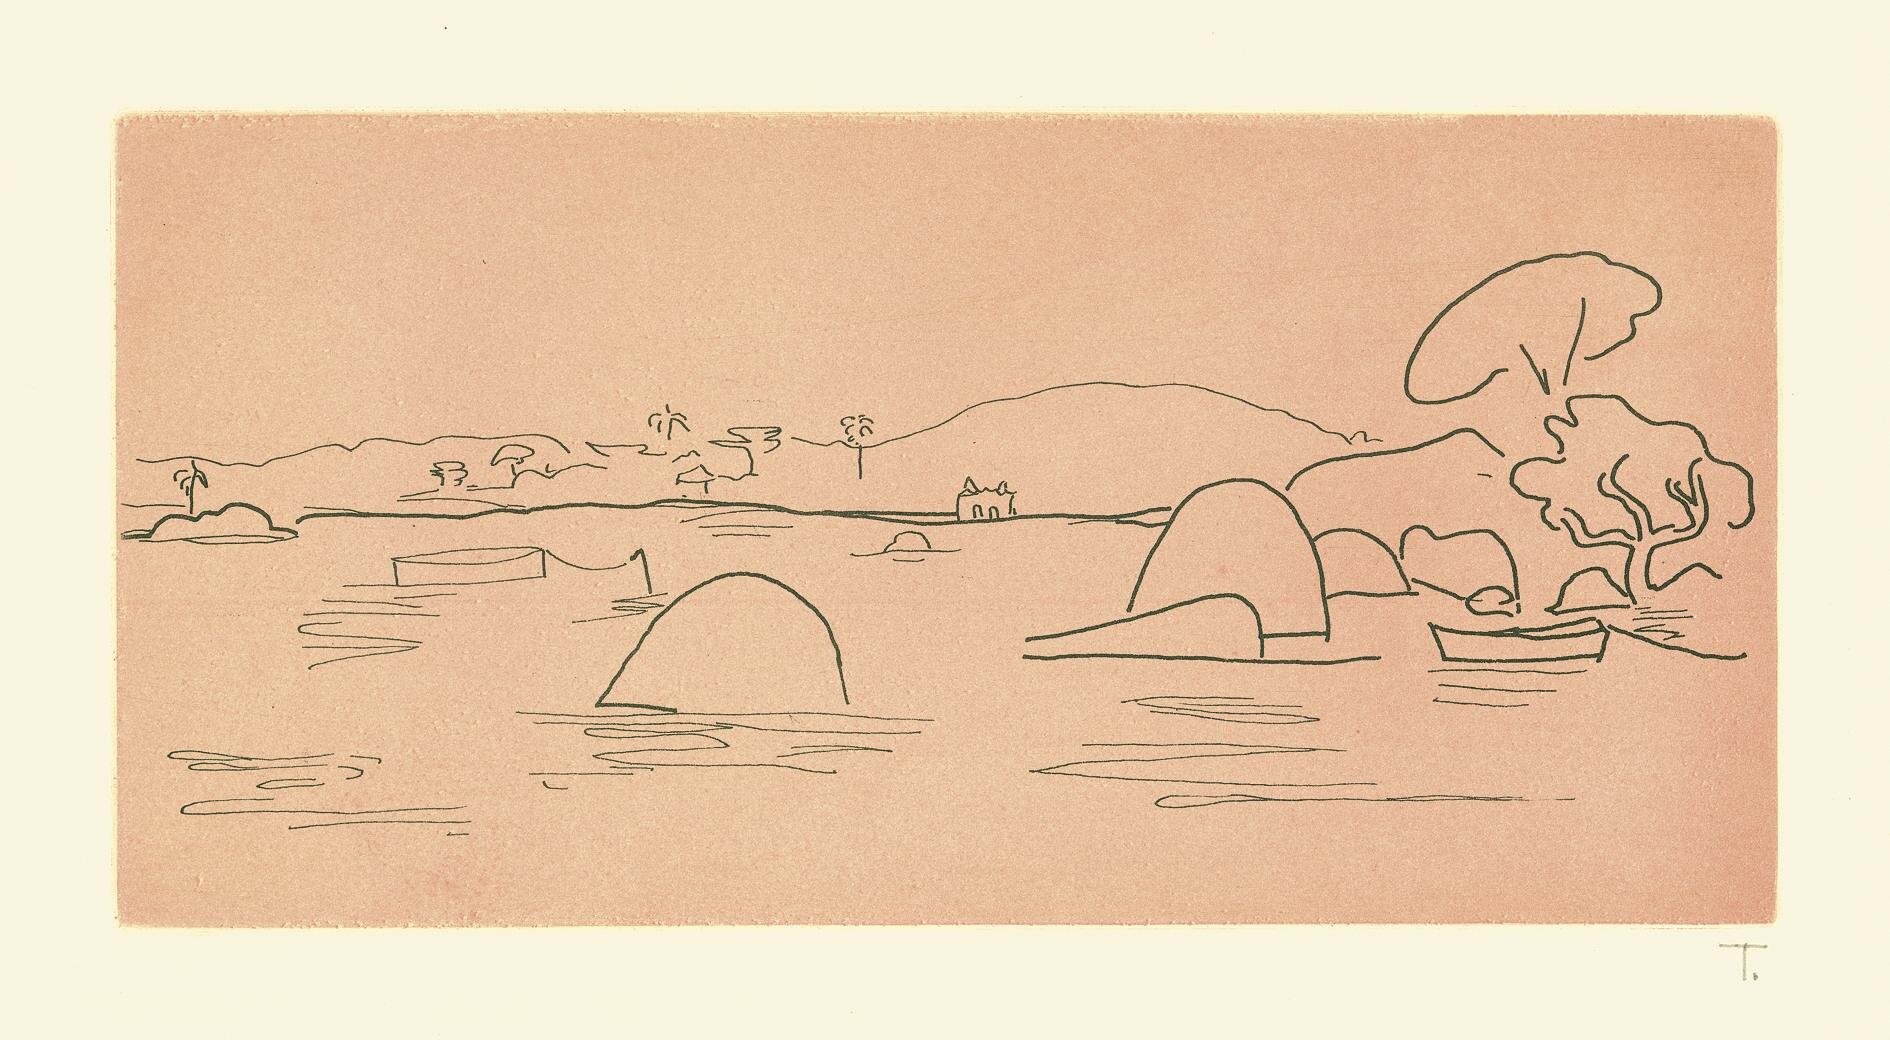 "Landscape" by Tarsila do Amaral, 1971